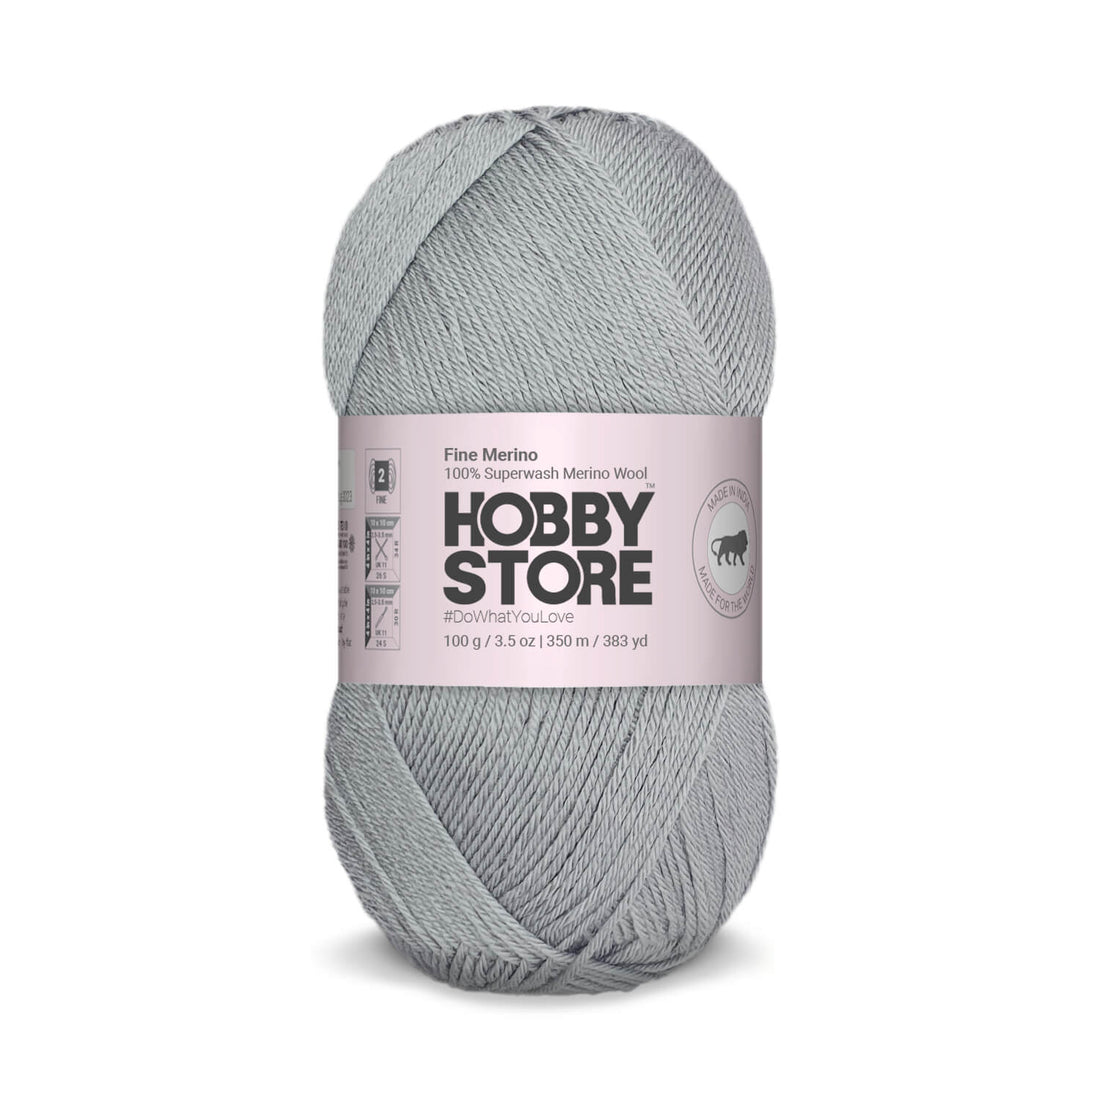 Fine Merino Wool by Hobby Store - Light Grey FM012